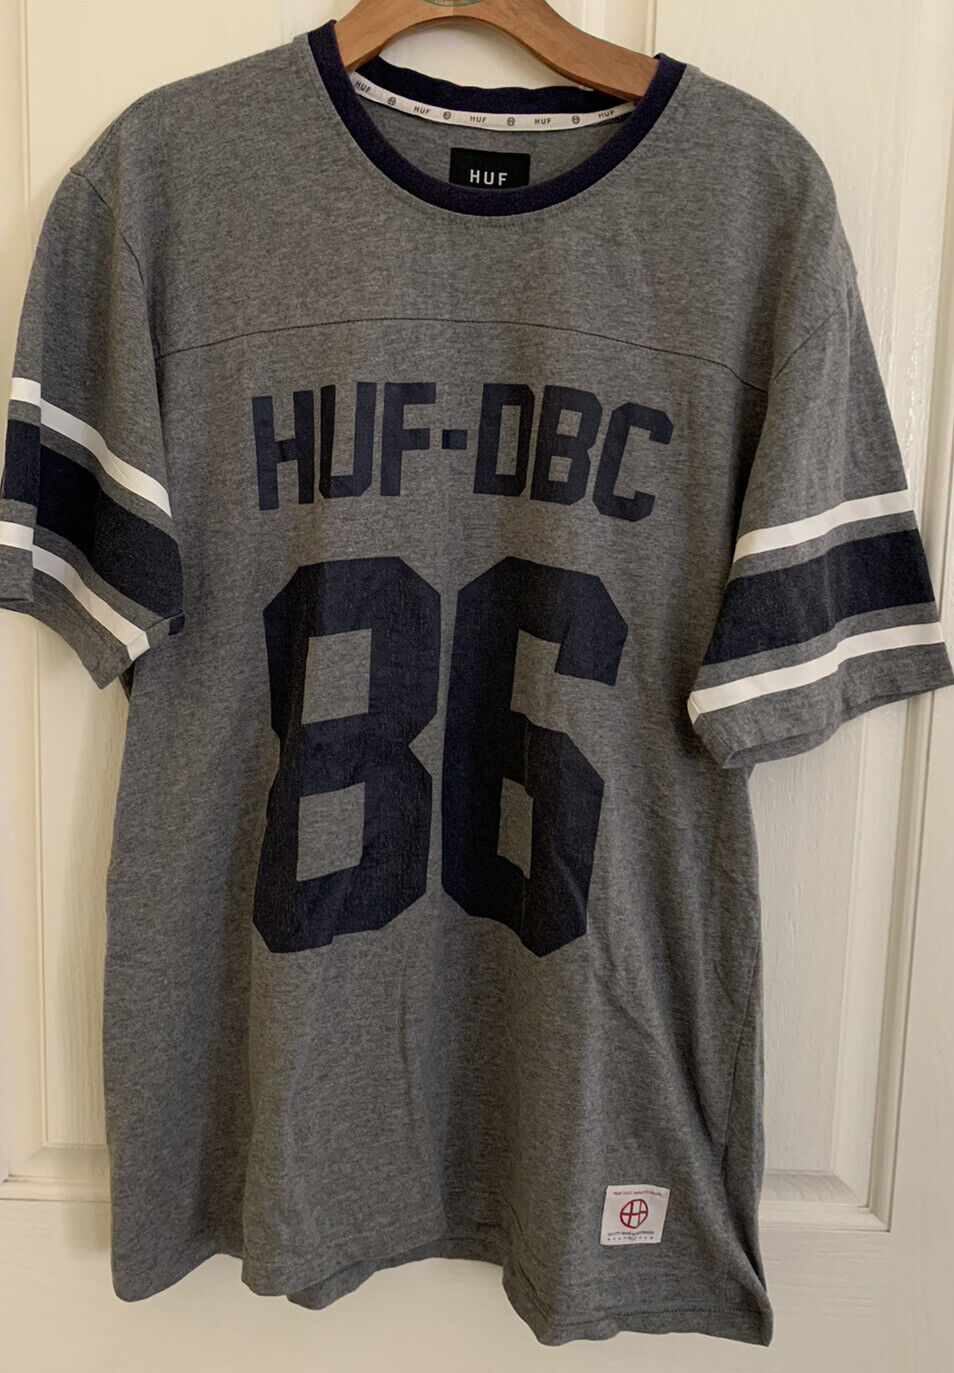 petróleo Empotrar Elegancia HUF/ HUF-DBC #86 skate Men's Gray T shirt Size L | eBay